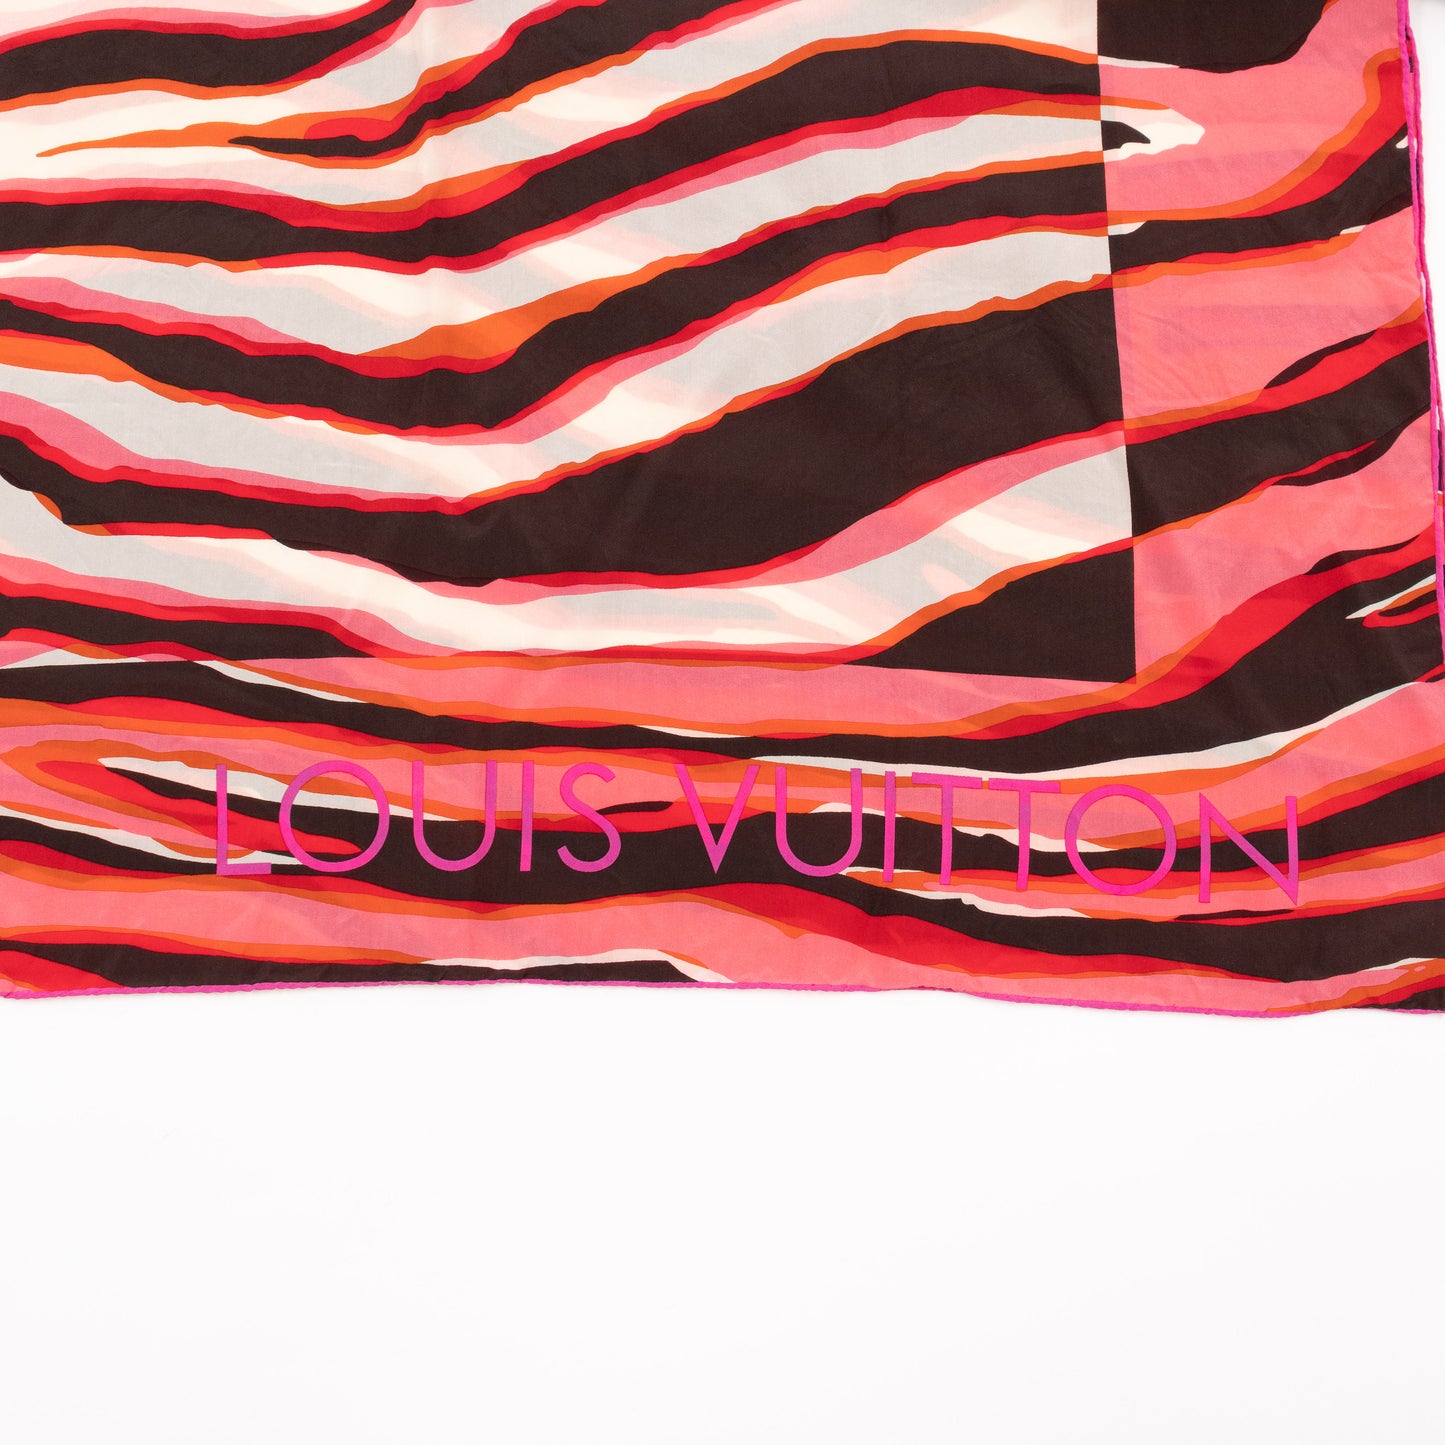 Zebra Silk Square Scarf Pink